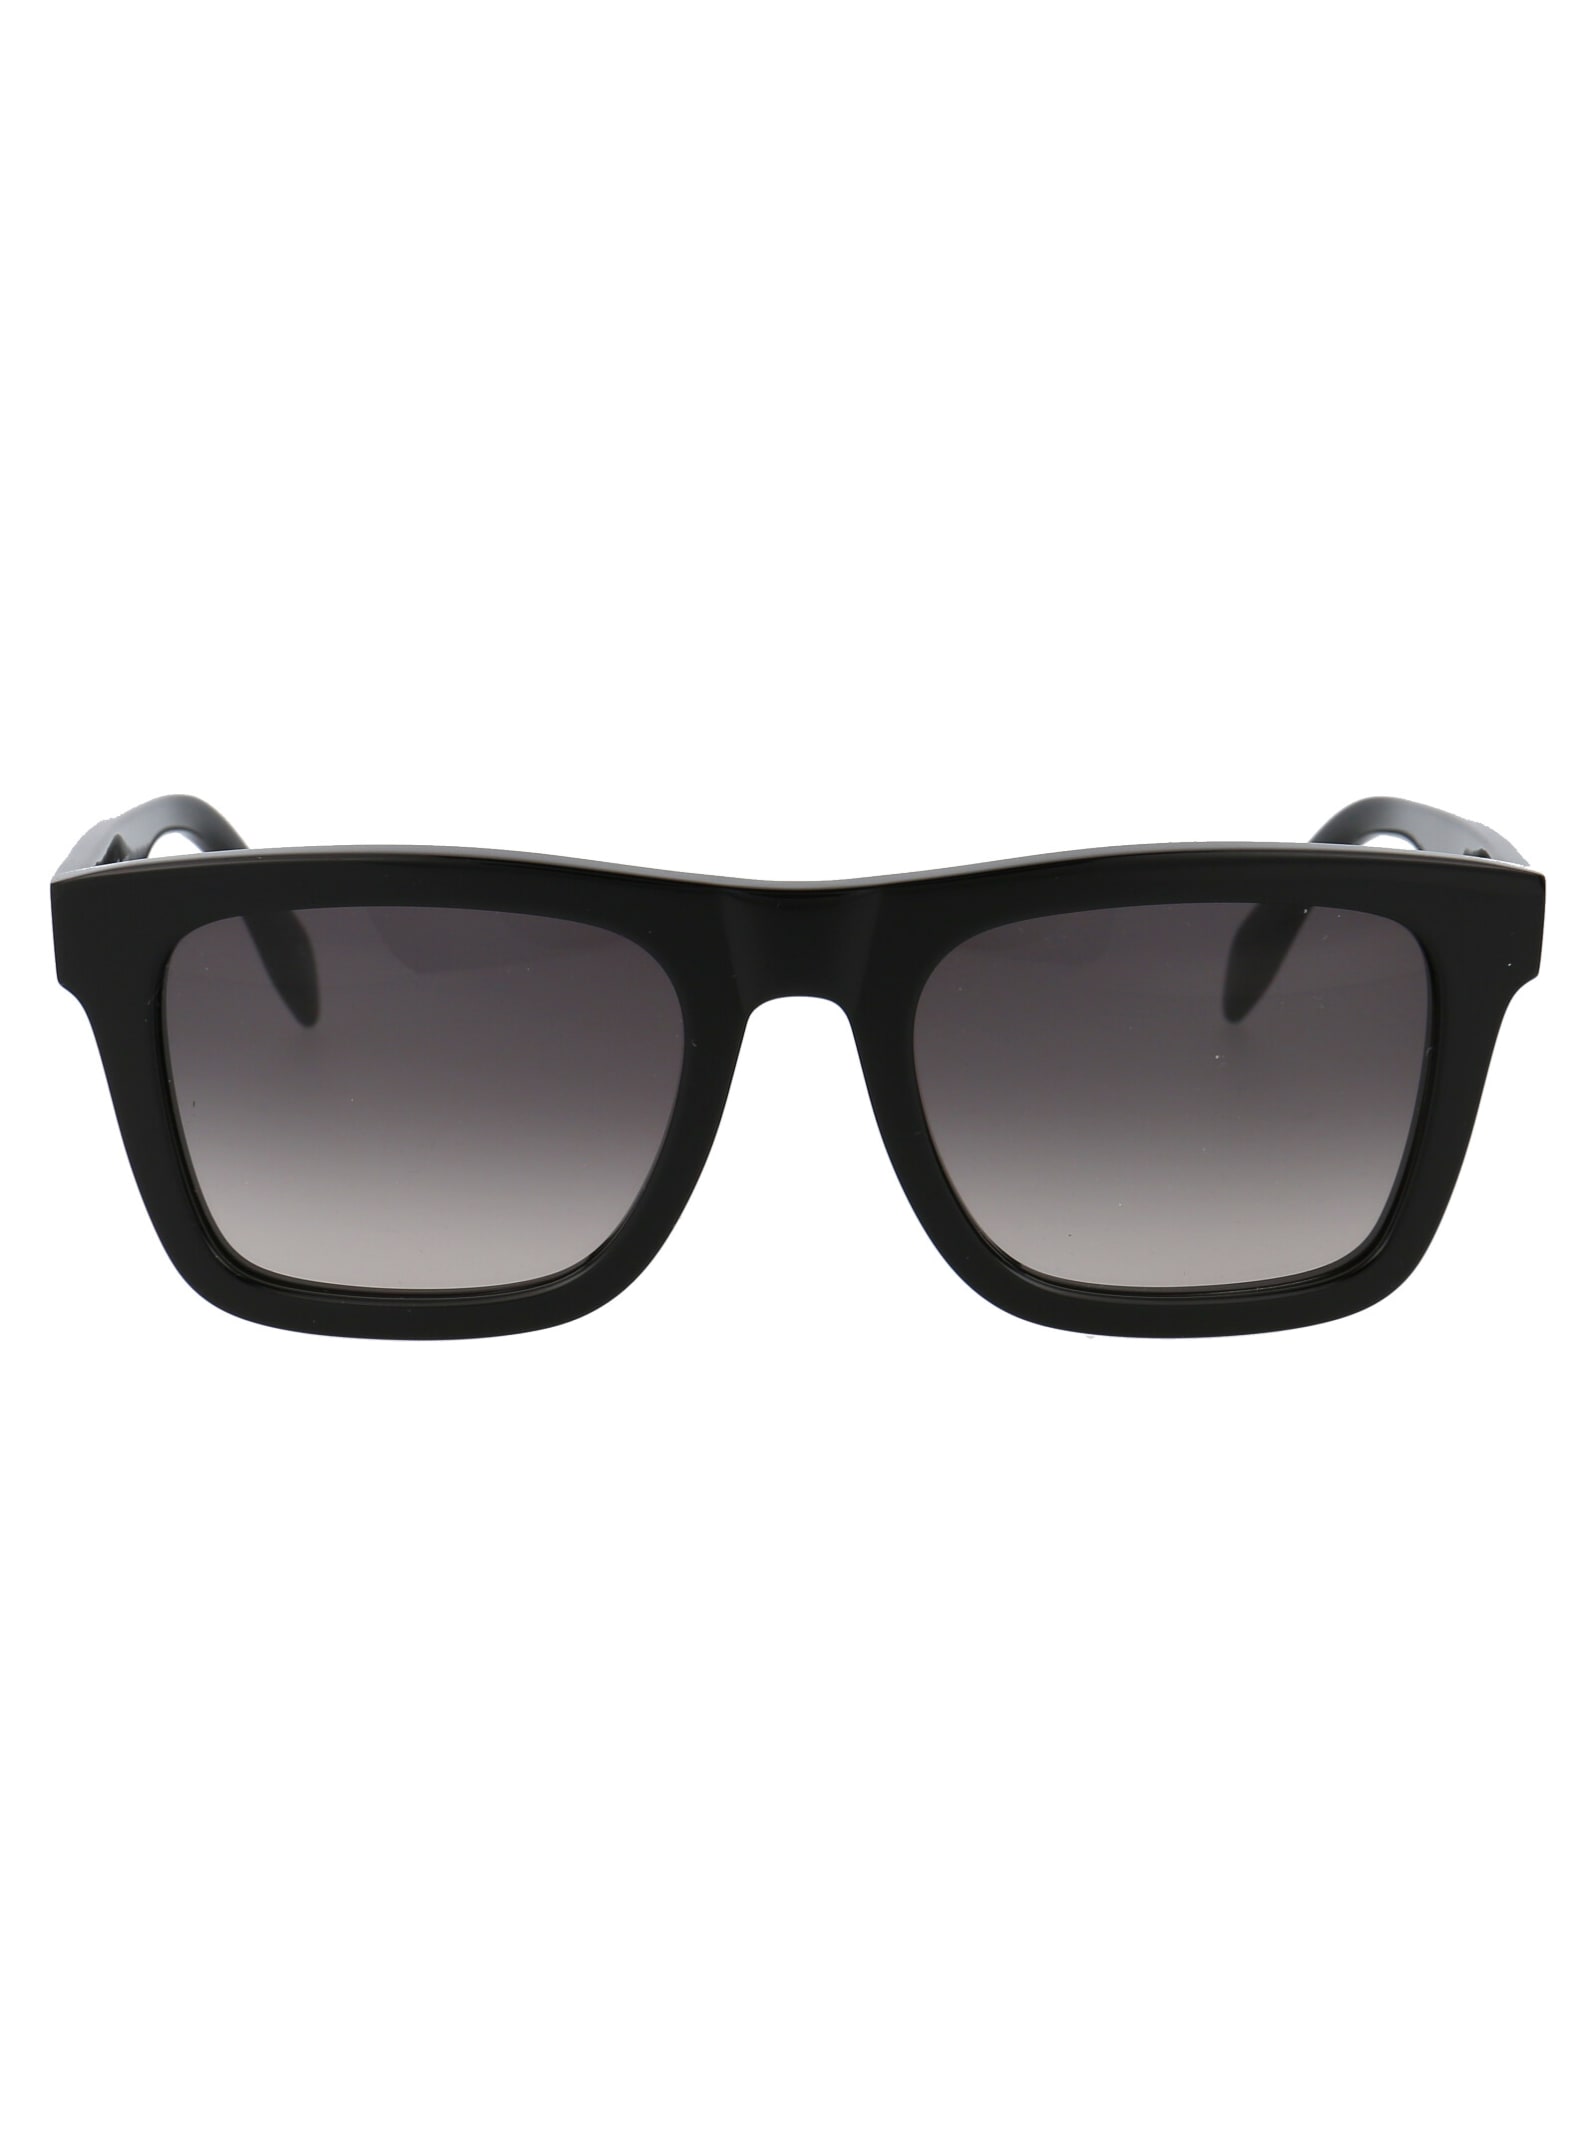 Alexander Mcqueen Am0301s Sunglasses In 001 Black Black Grey